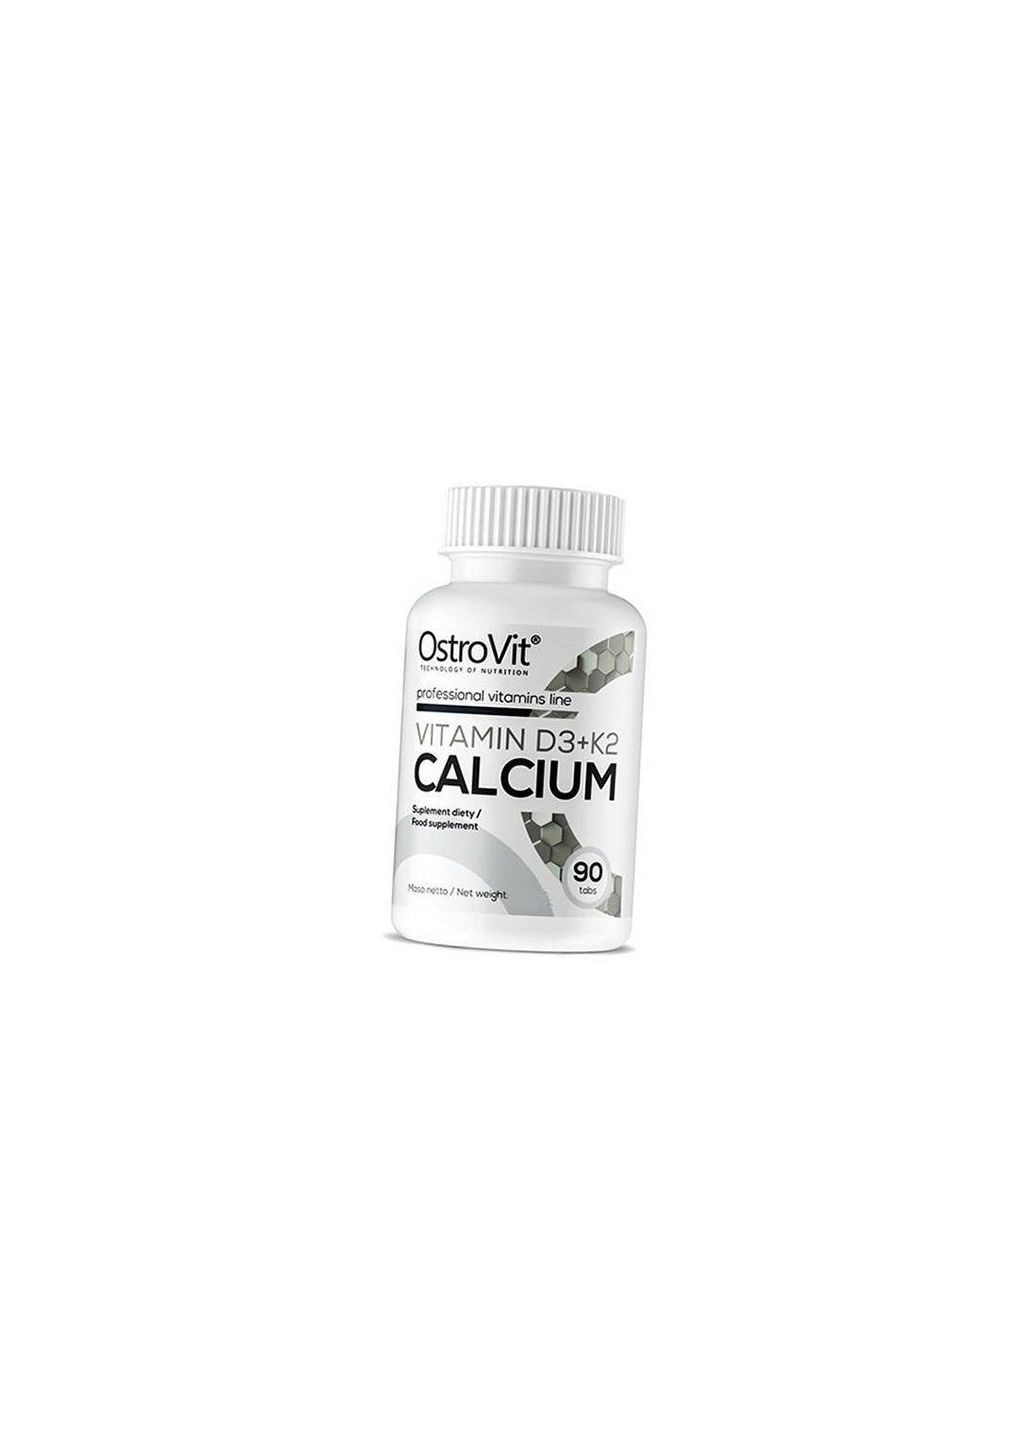 Кальций Д3 К2, Vitamin D3+K2 Calcium, 90таб (36250017) Ostrovit (293257195)